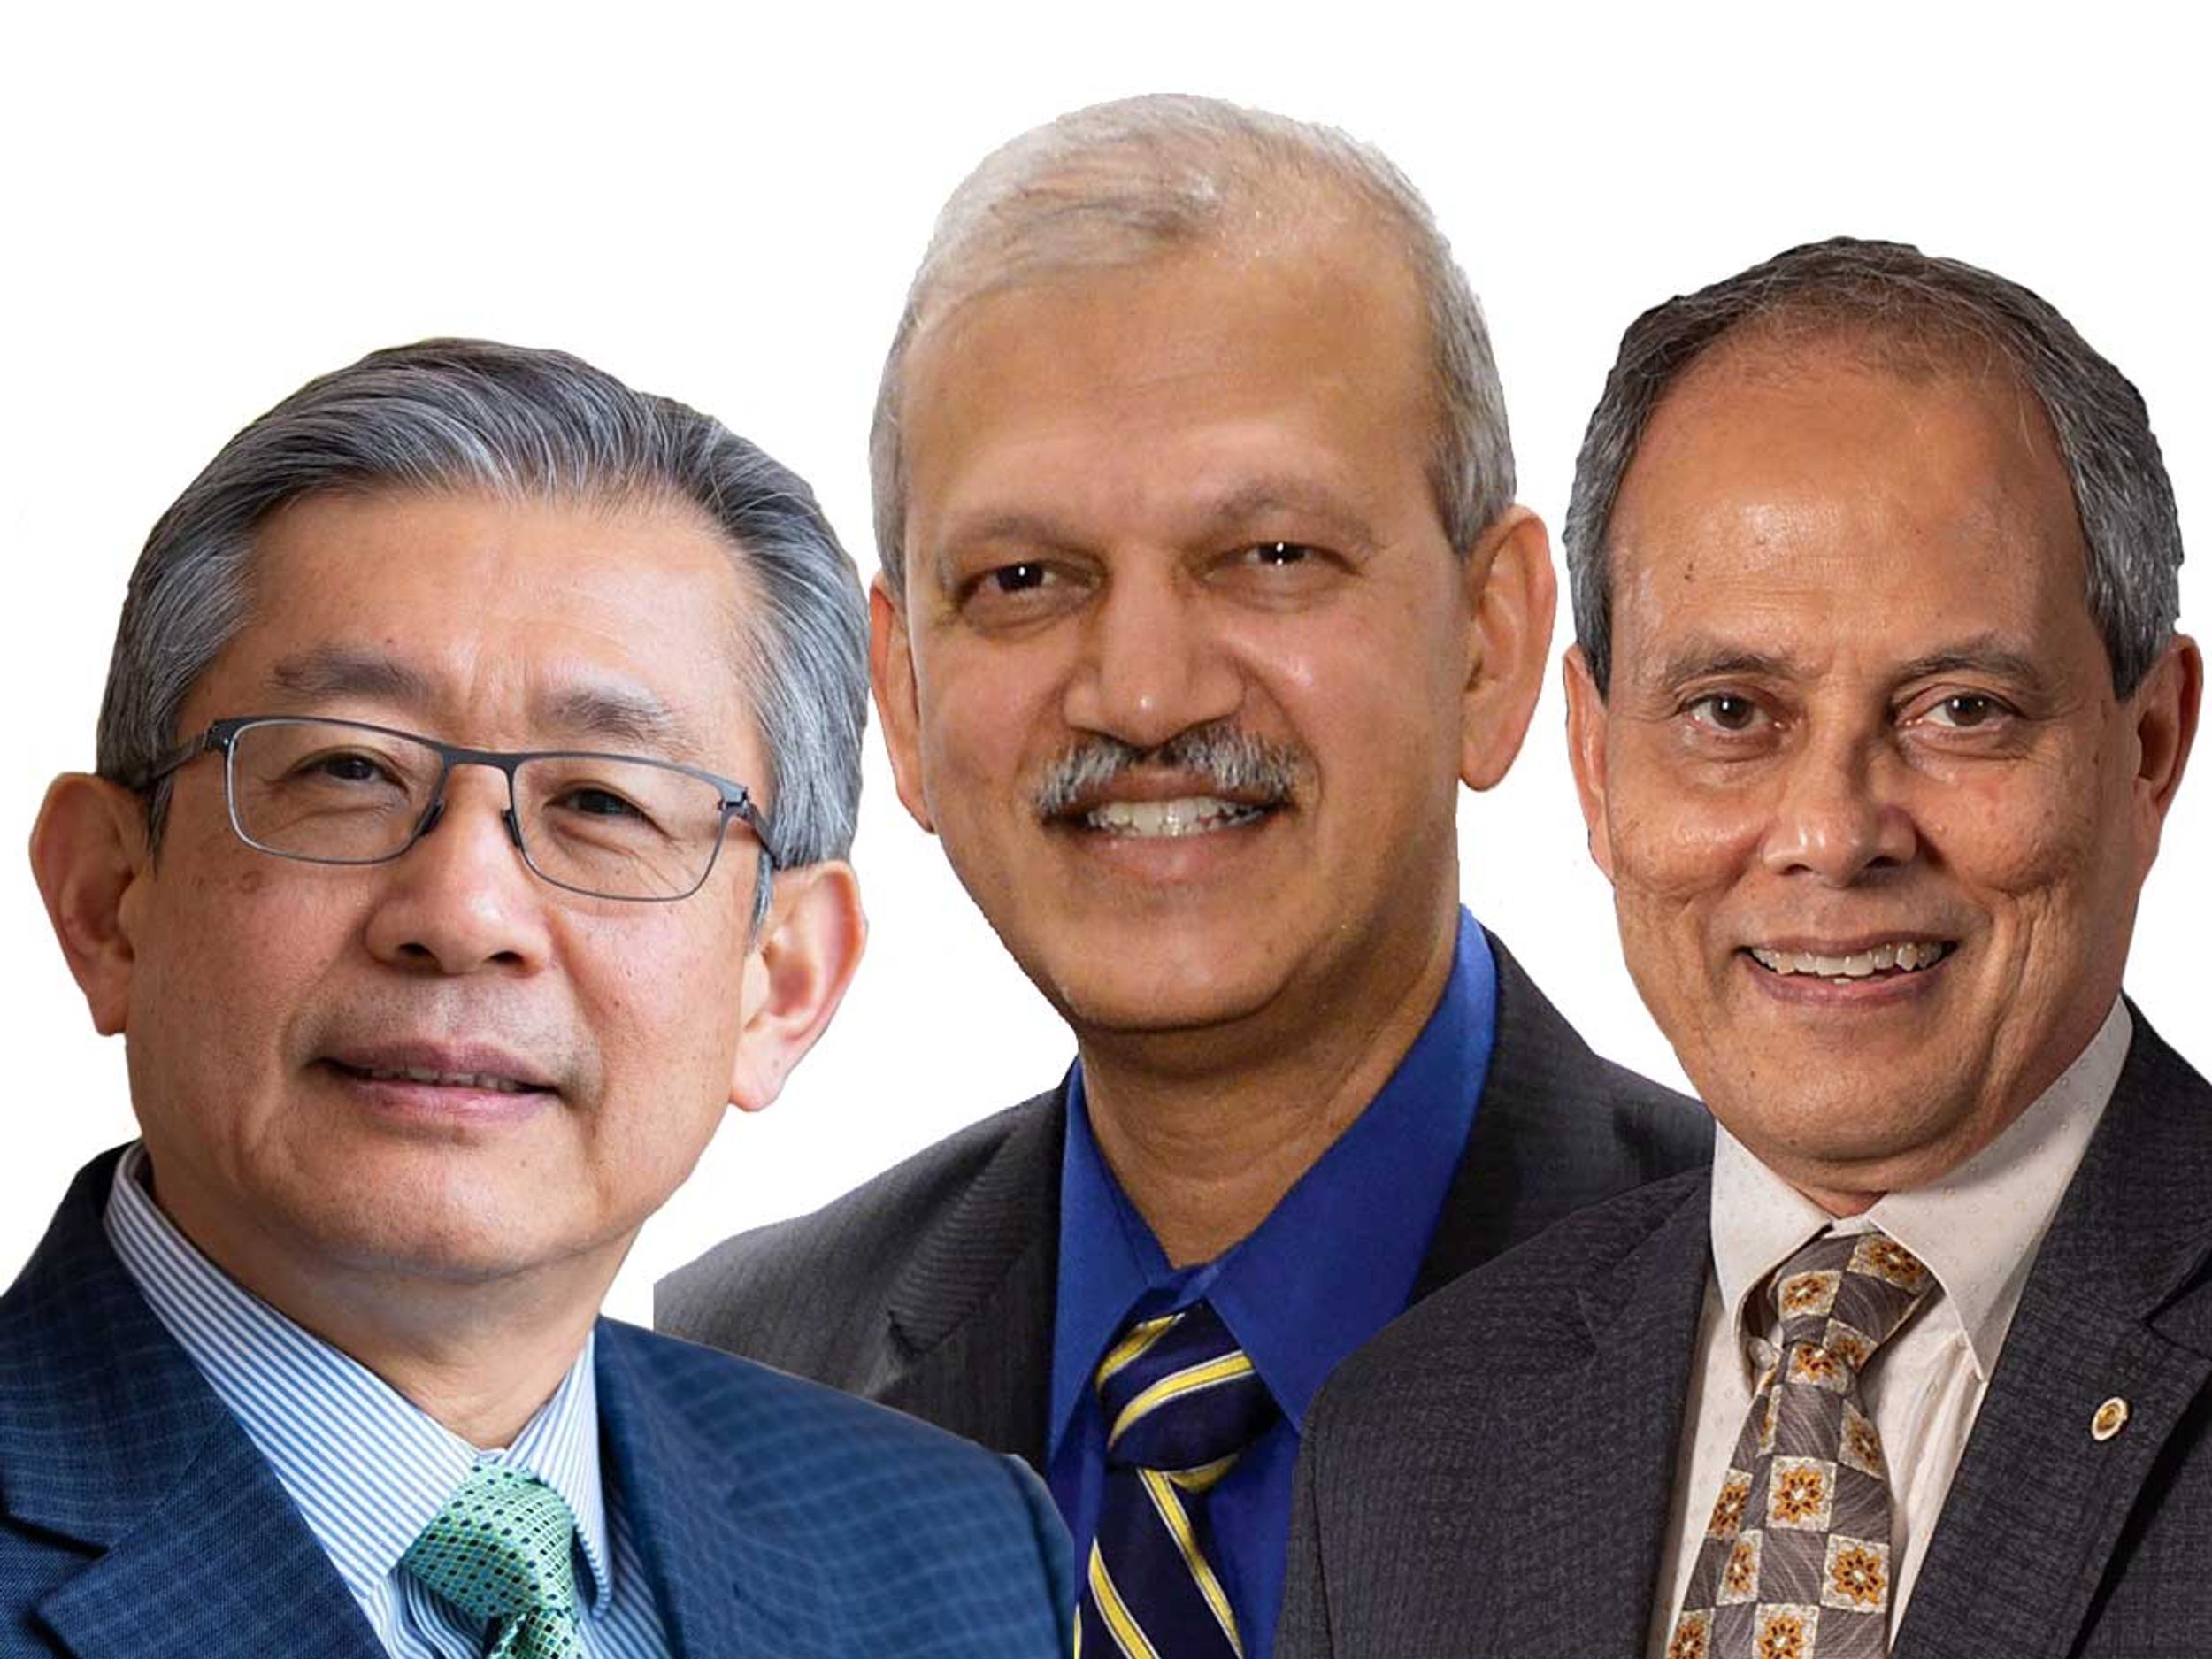 From left, IEEE president-elect candidates Ray Liu, S.K. Ramesh, and Saifur Rahman